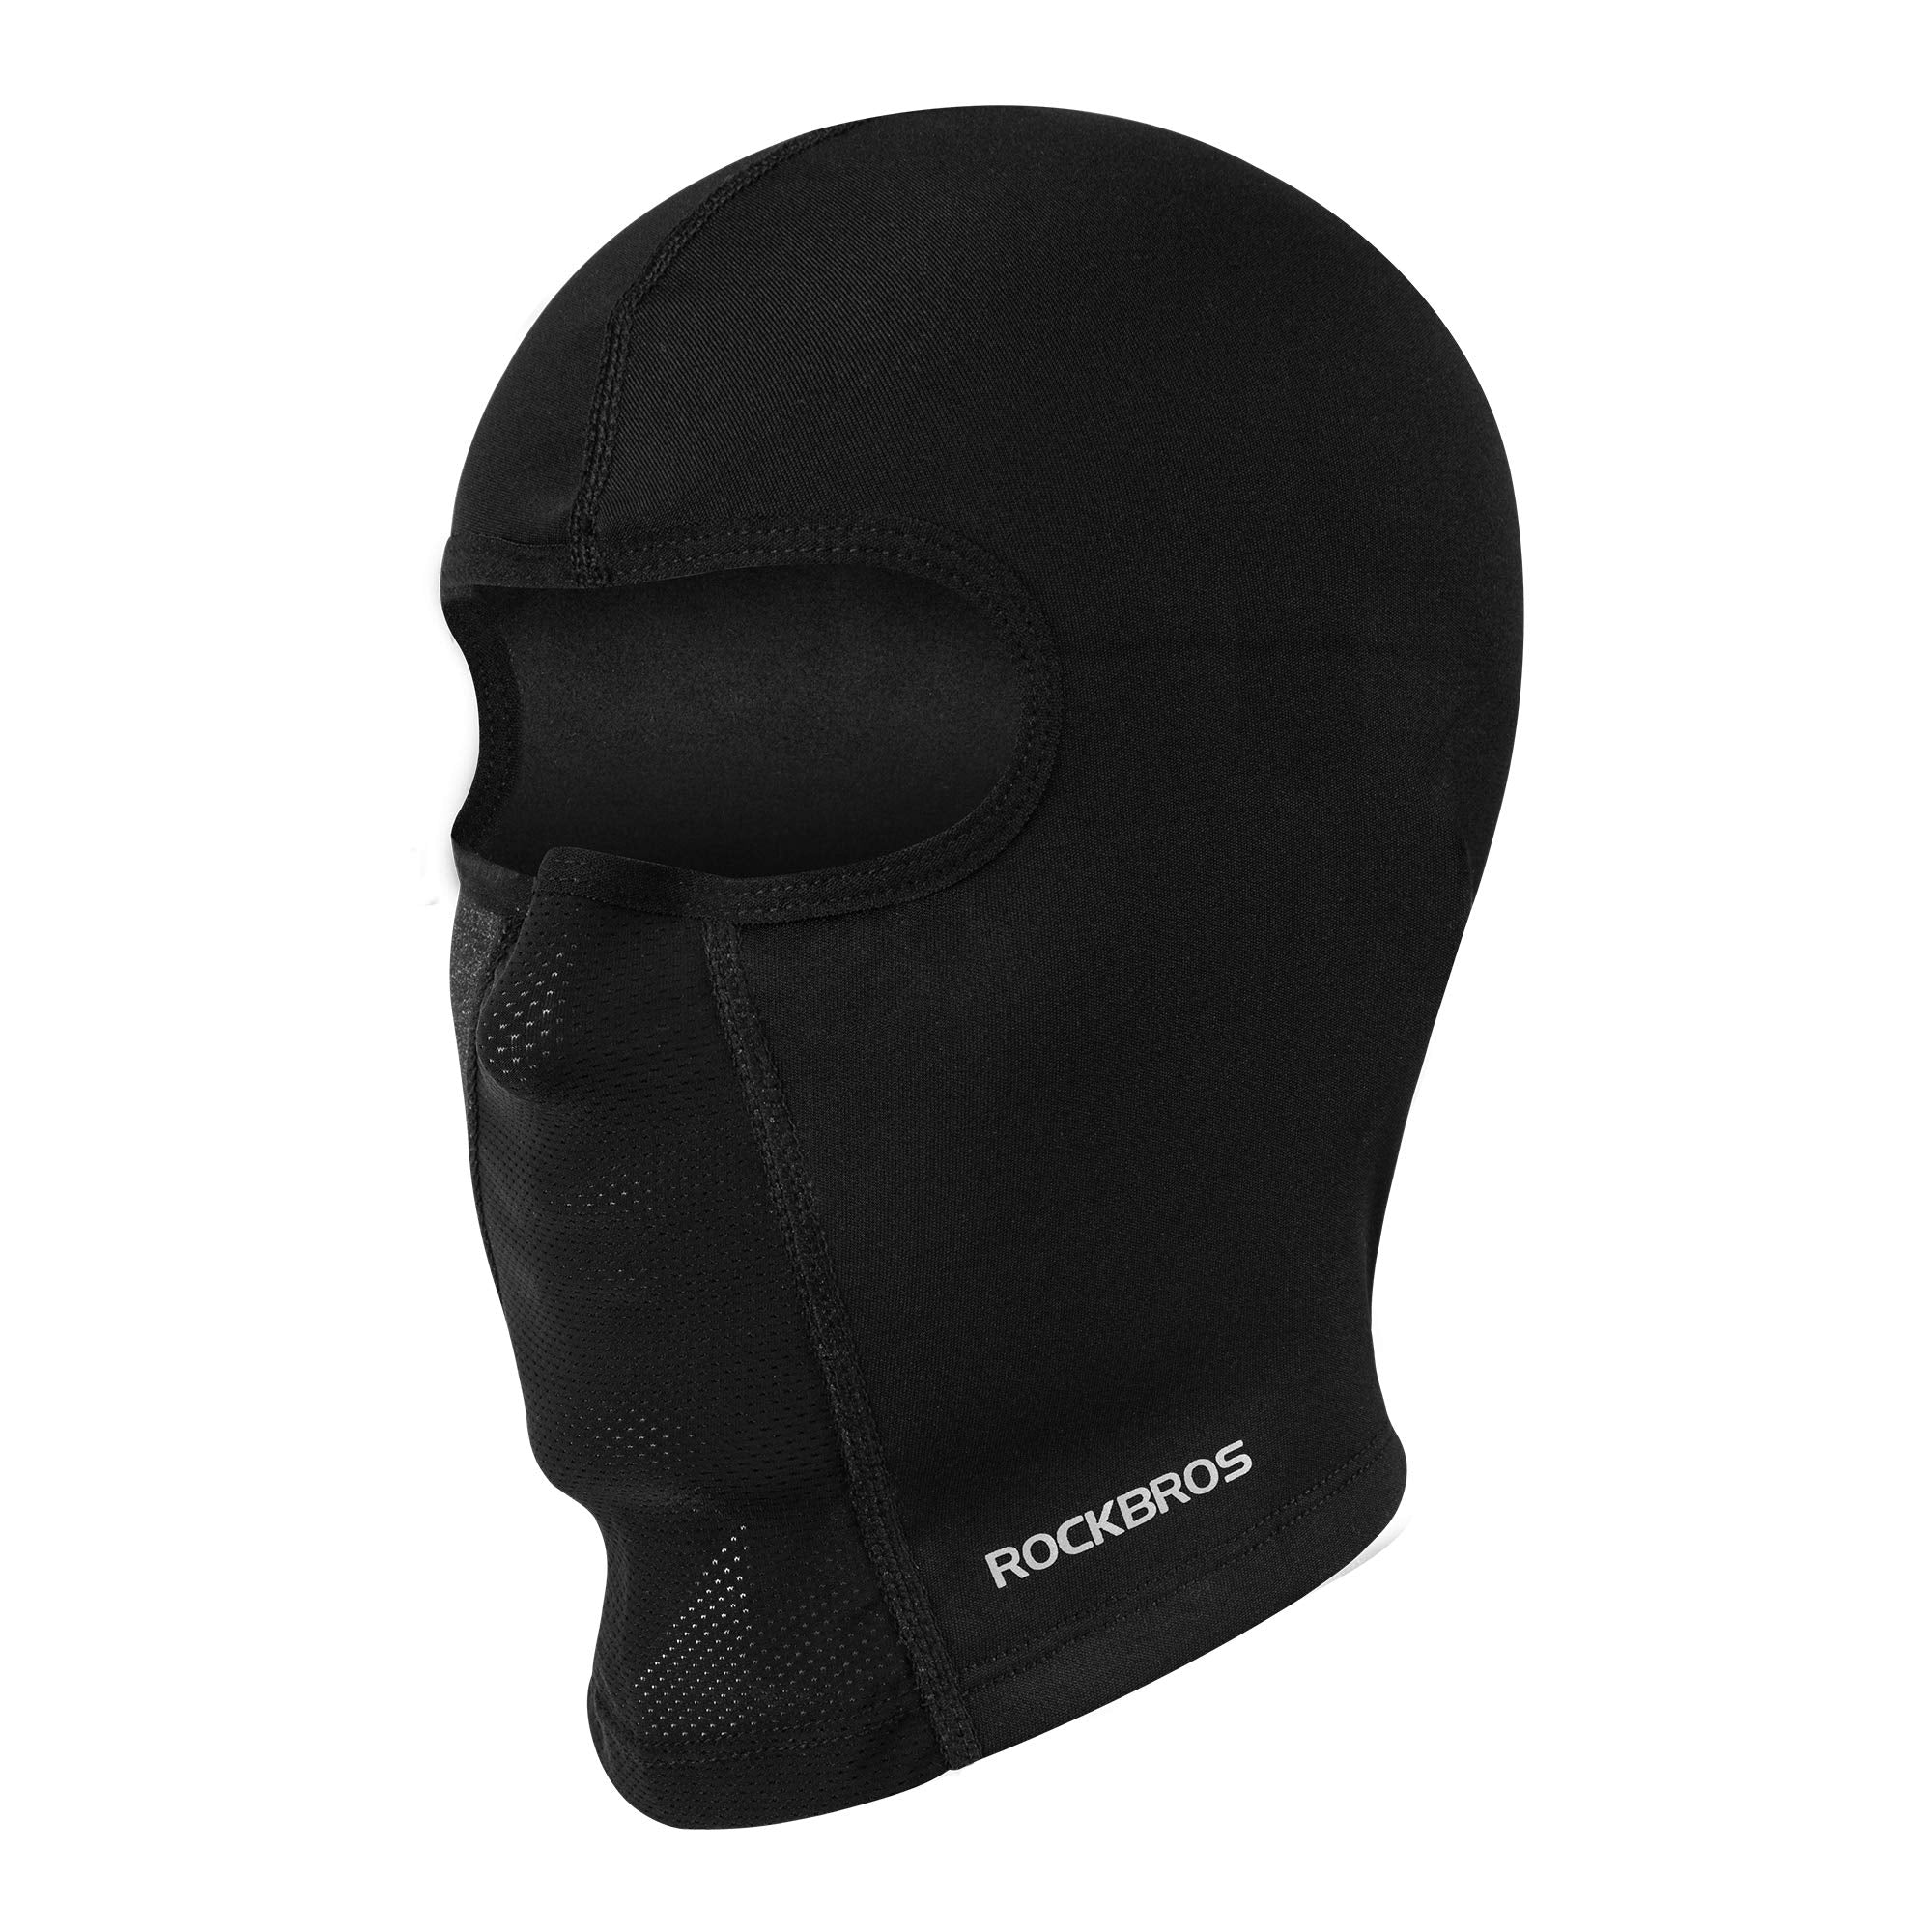 ROCKBROS Windproof Balaclava Winter Face Cover  Thermal Fleece Neck Warmer #Style_Black